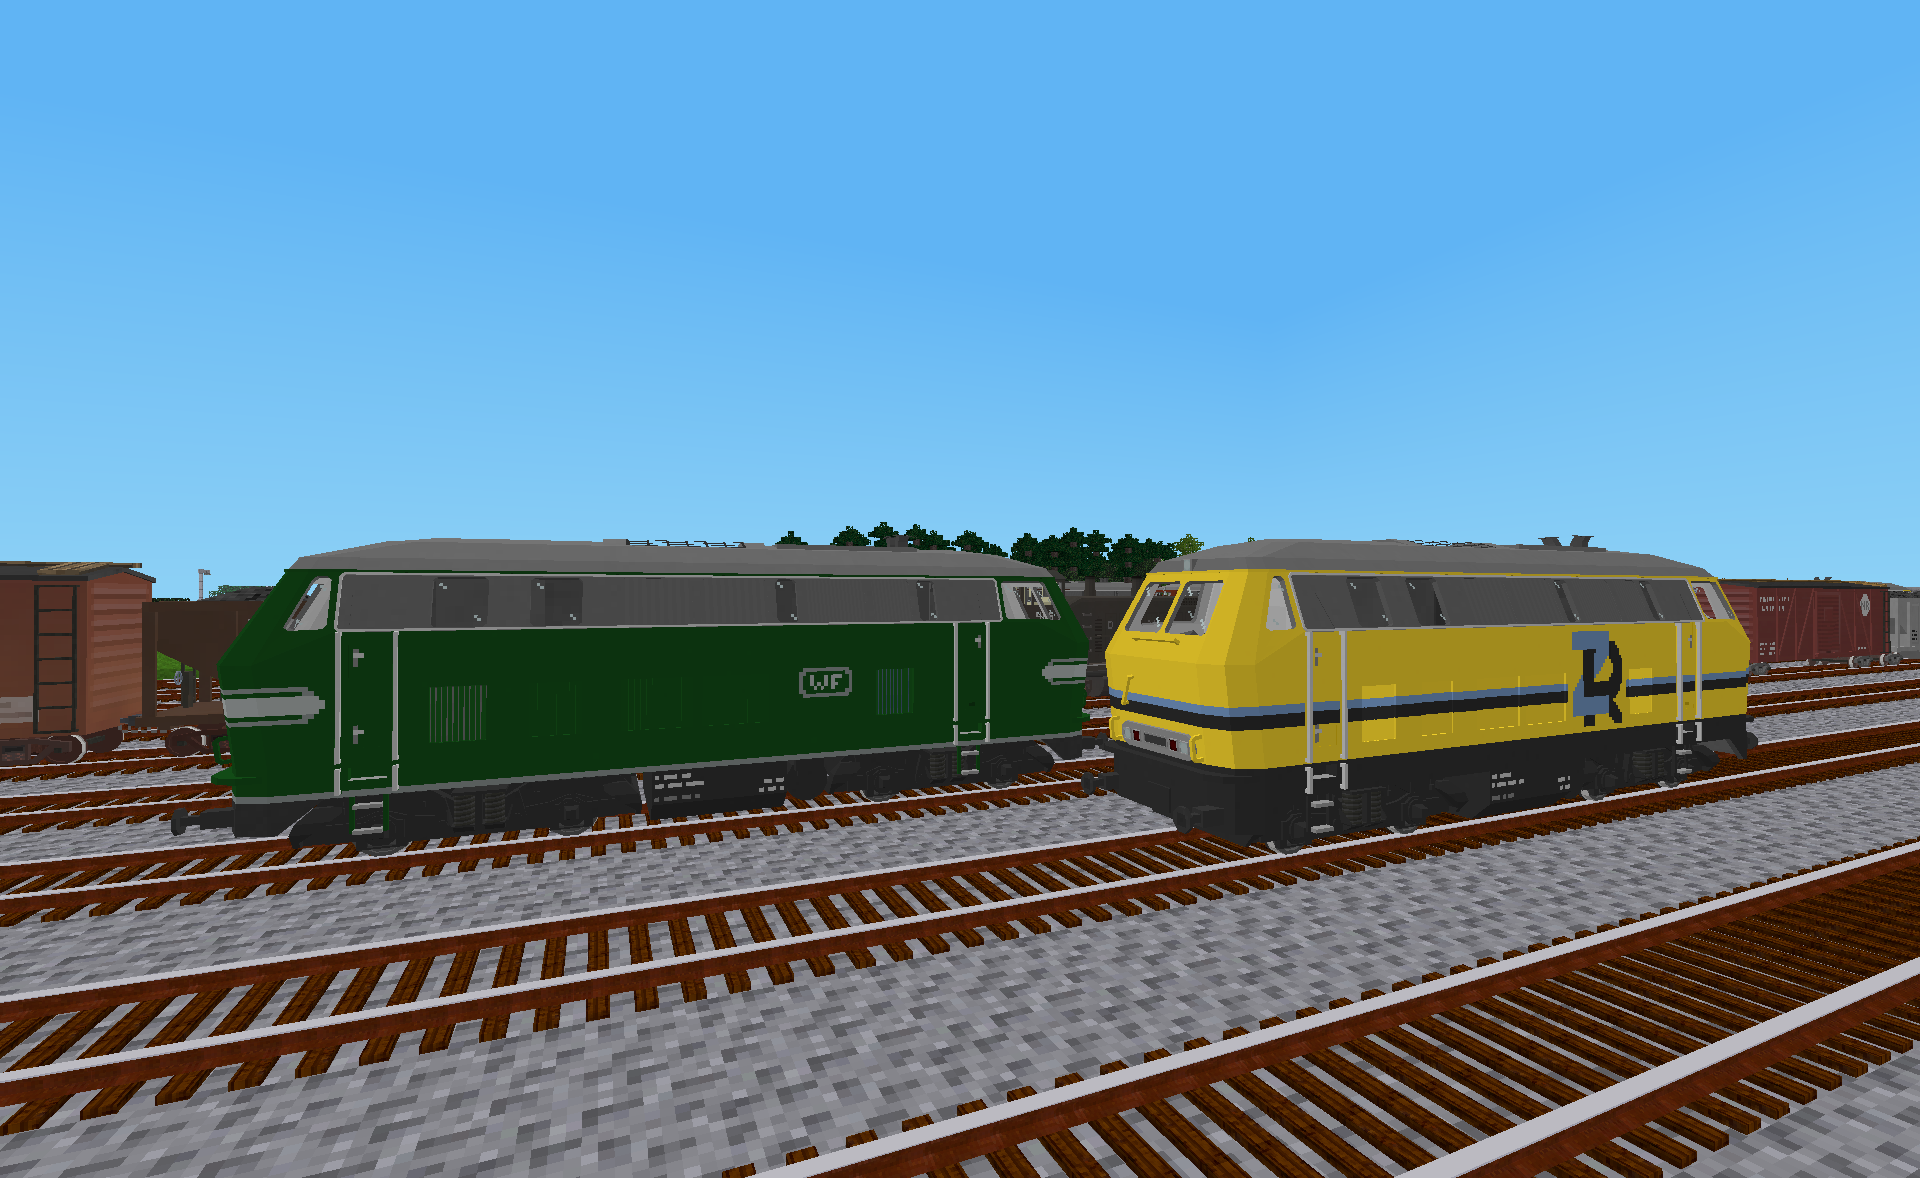 Additional liveries for the European BR218 Diesel Locomotive